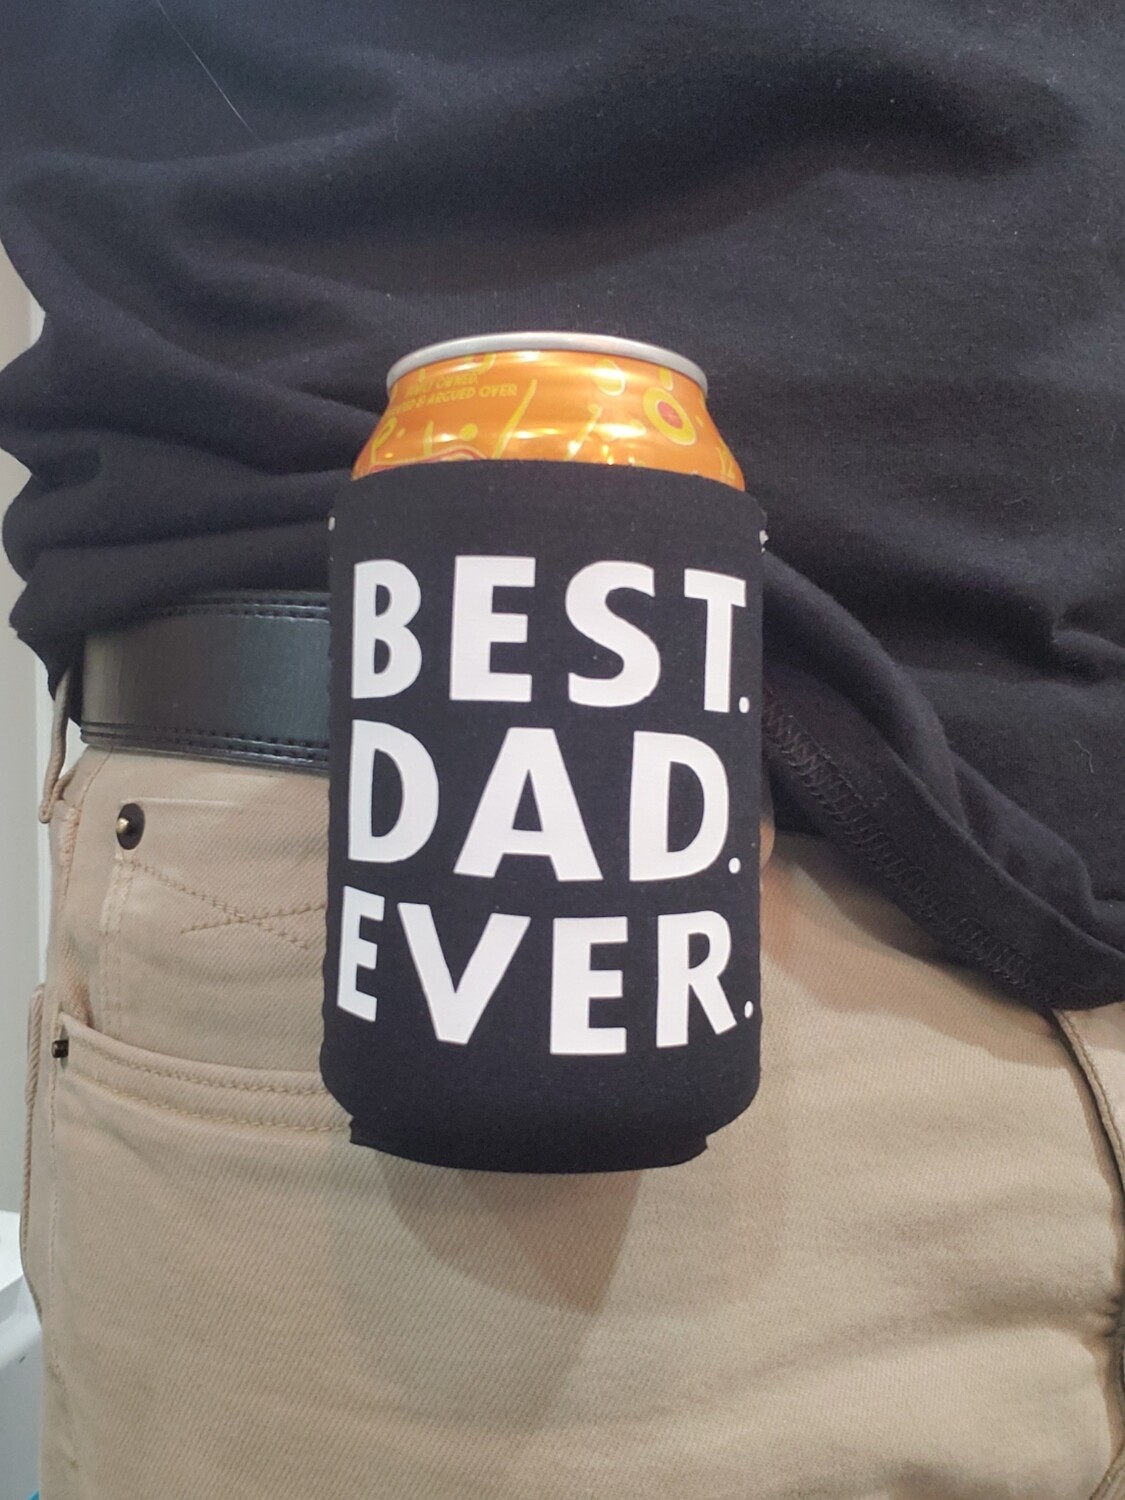 Best. Dad. Ever.